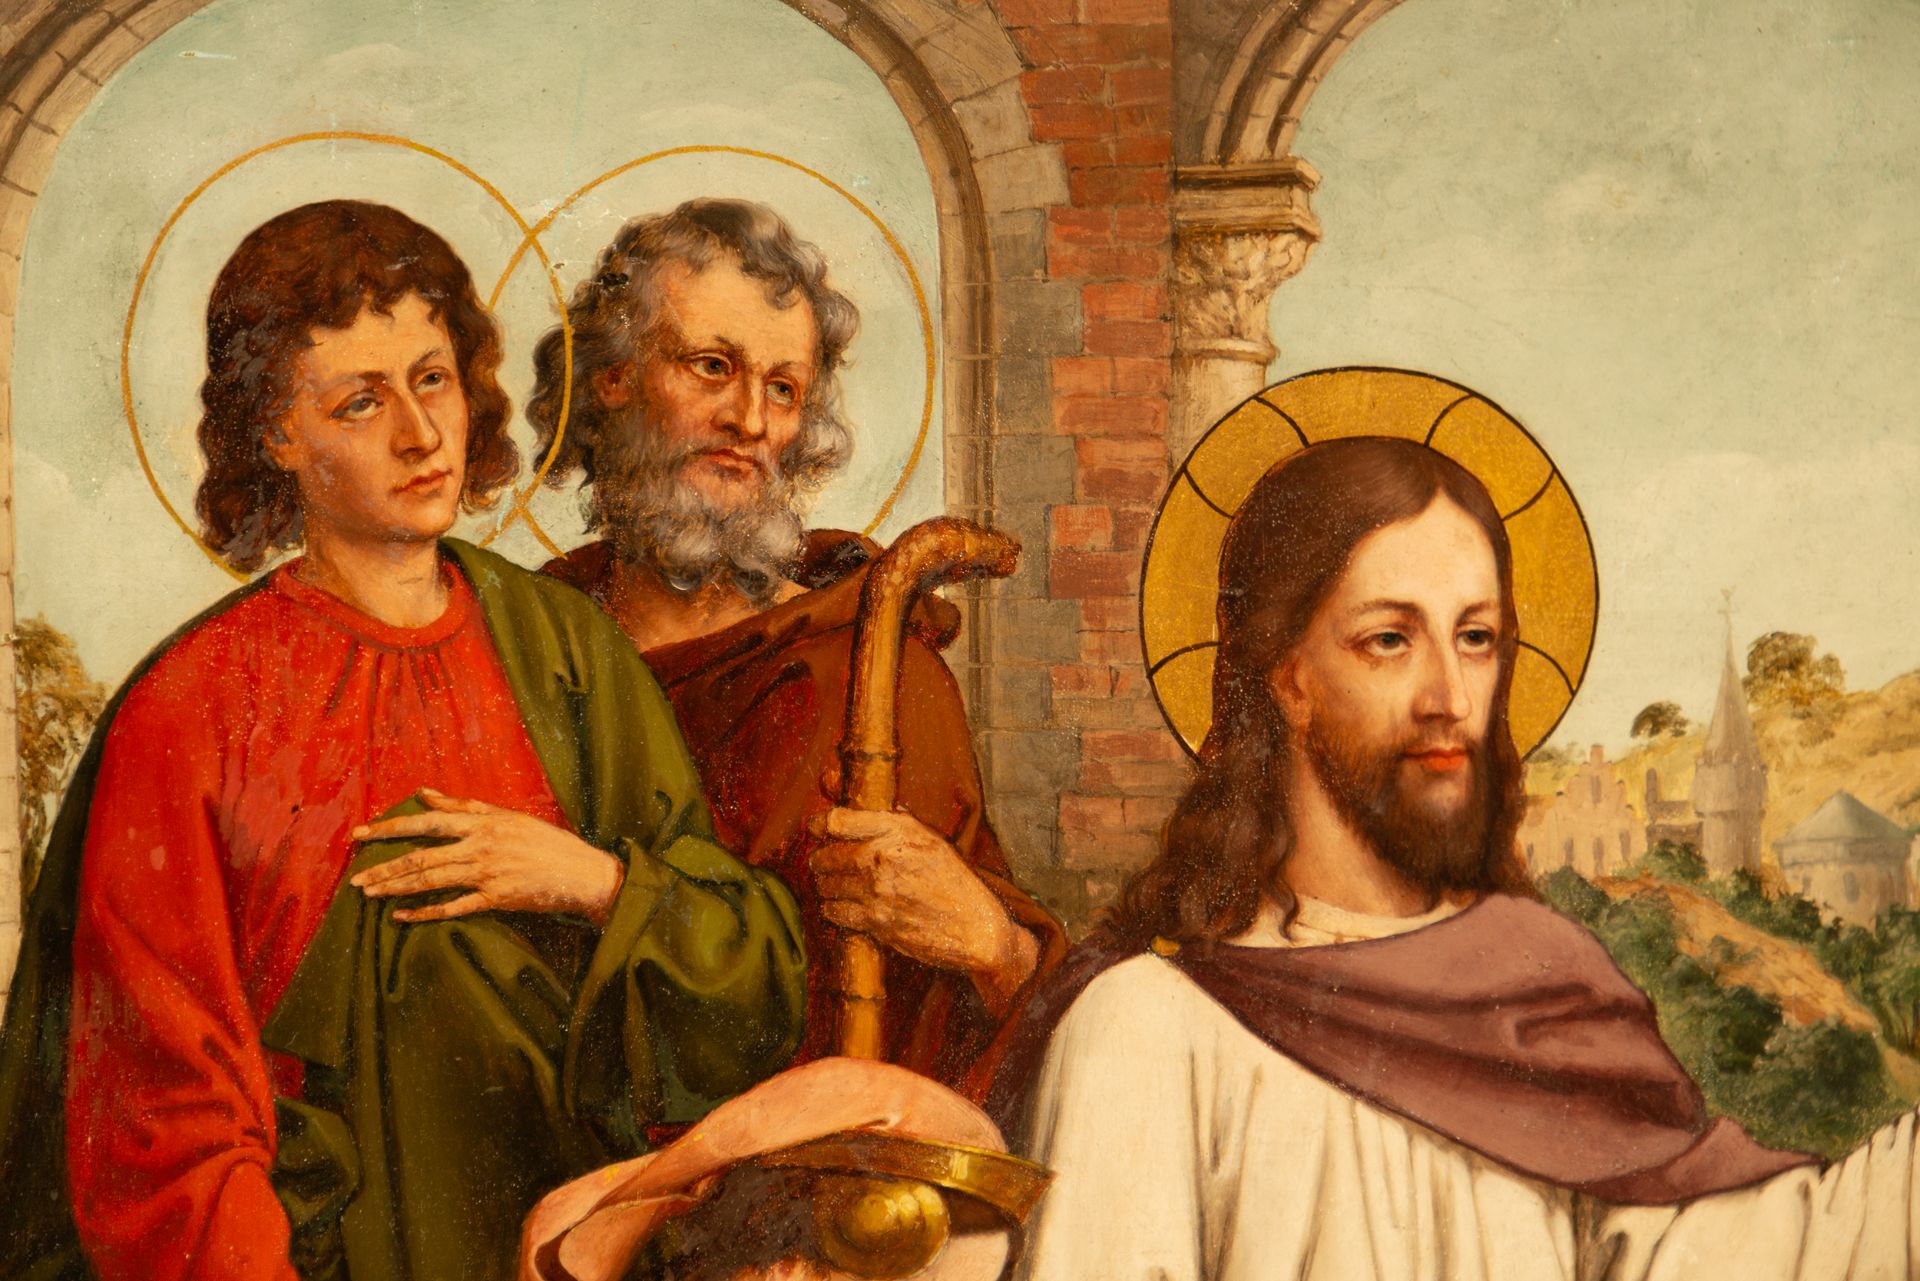 Christ and the Samaritan, 19th century Italian school - Image 5 of 8